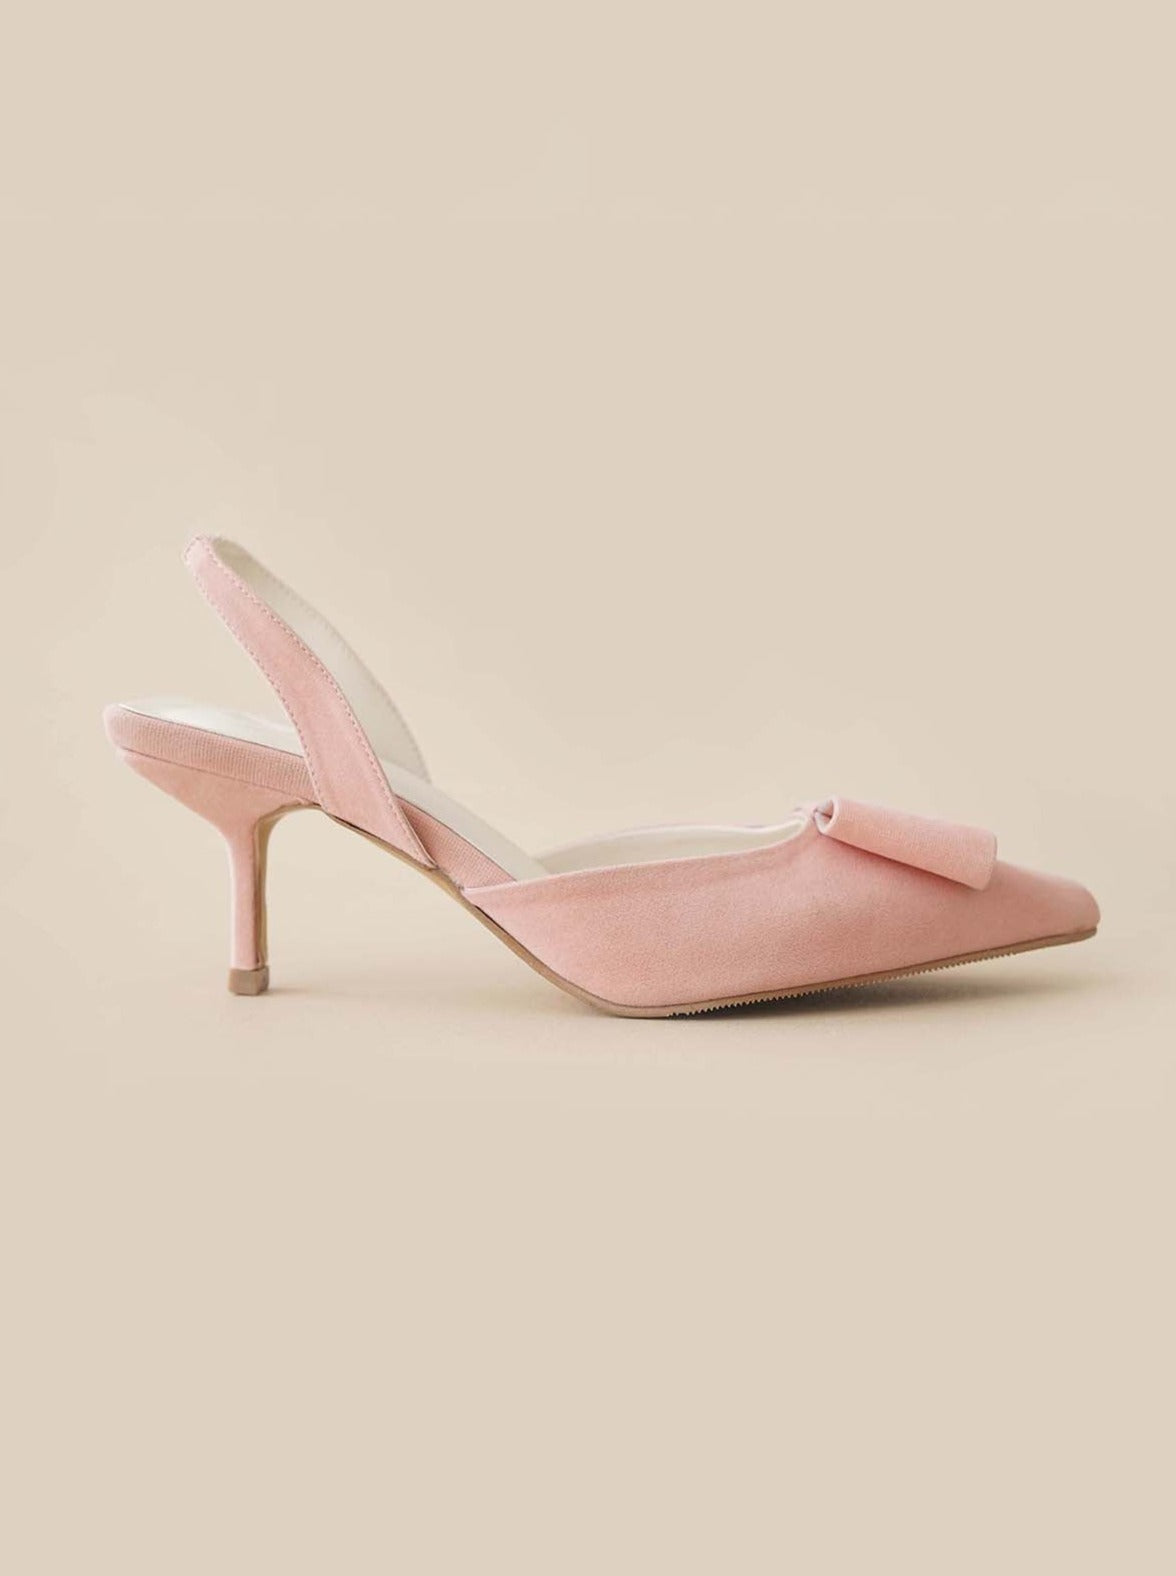 Gilena Heels in Blush Pink